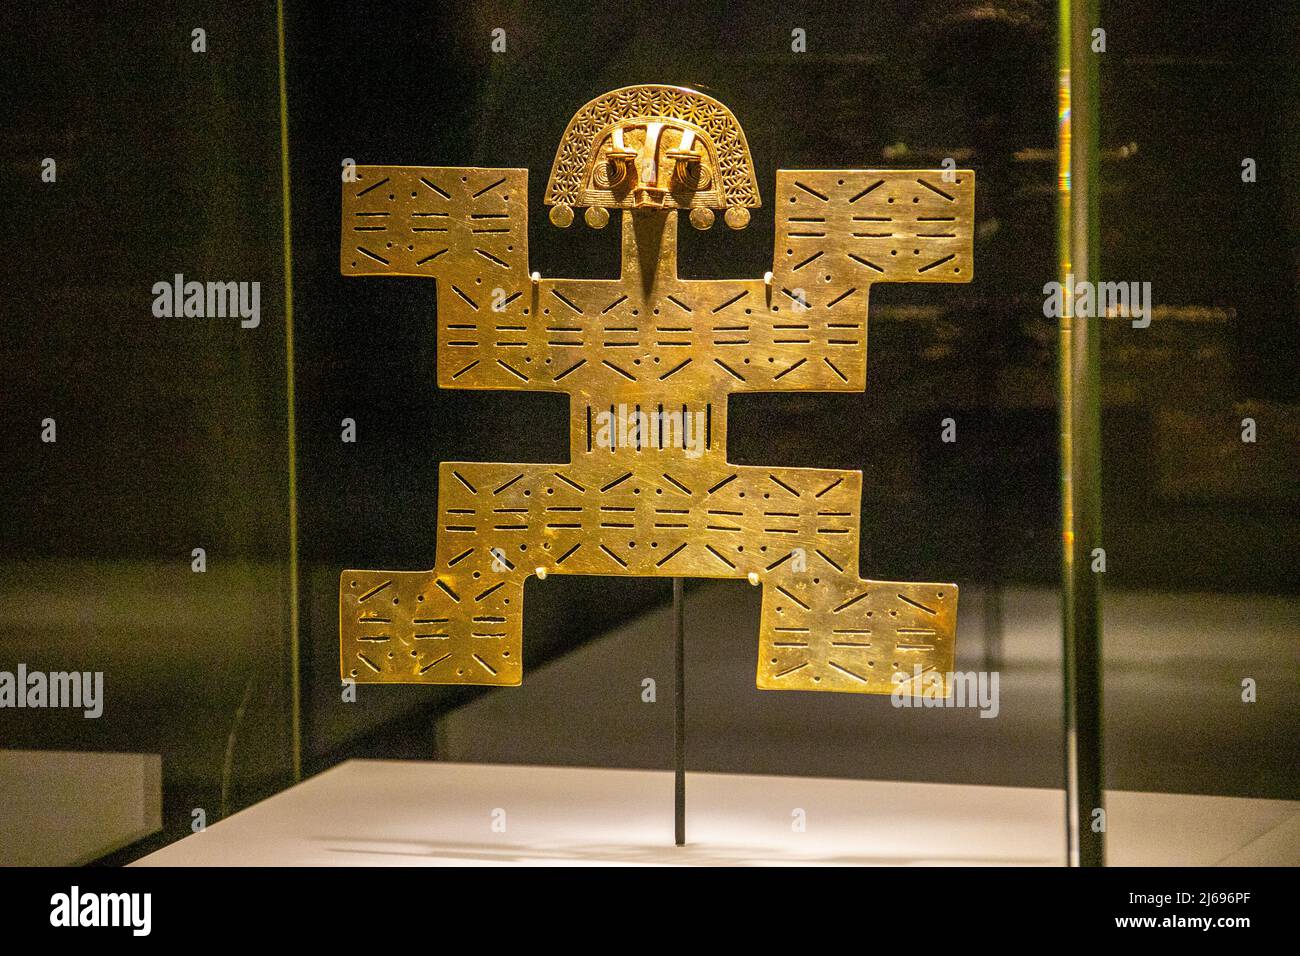 Goldenes Brustschild in Form eines jaguar - Mannes, Museo del Oro, Bogotá, Kolumbien Stockfoto